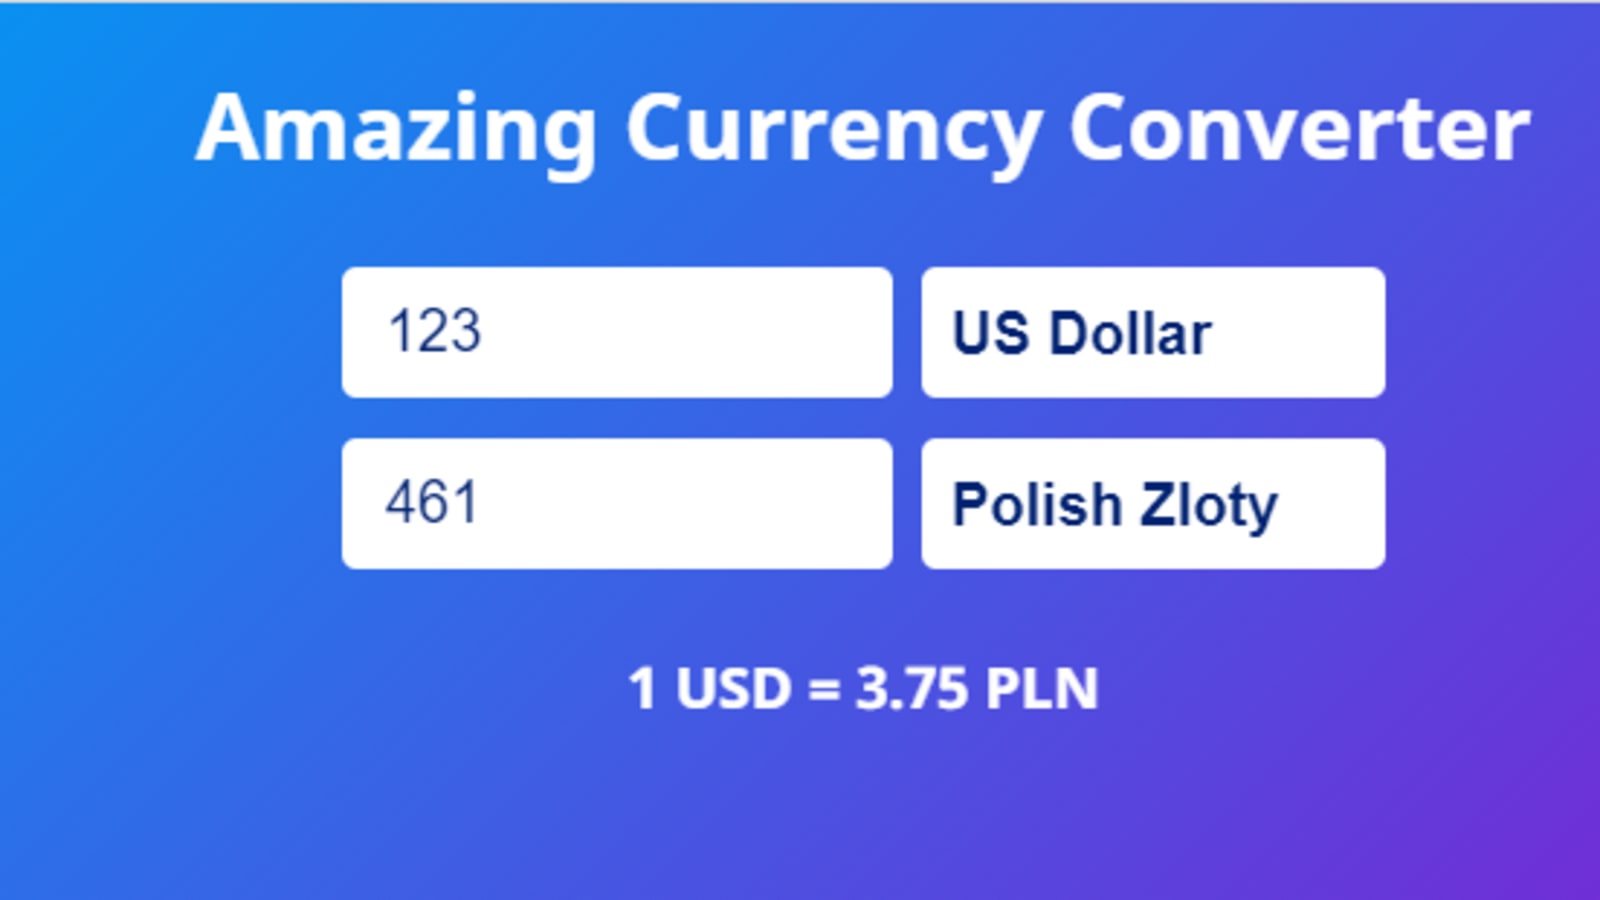 Amazing Currency Converter - DEV Community